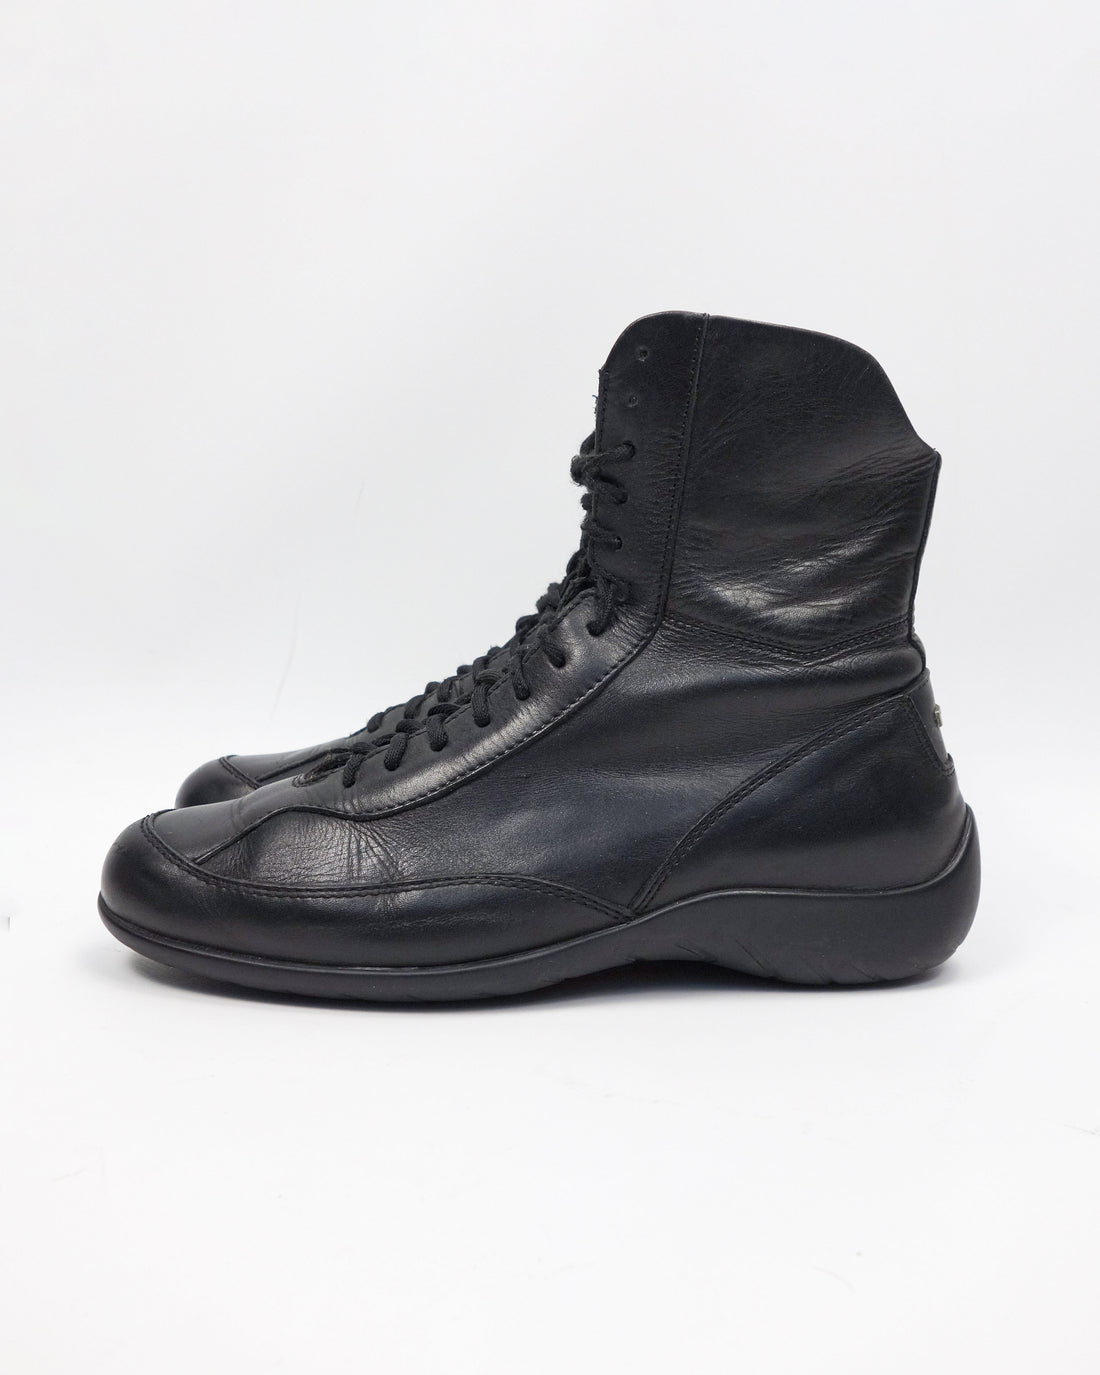 Pirelli Black Motorbike Style Leather Boots 2000's